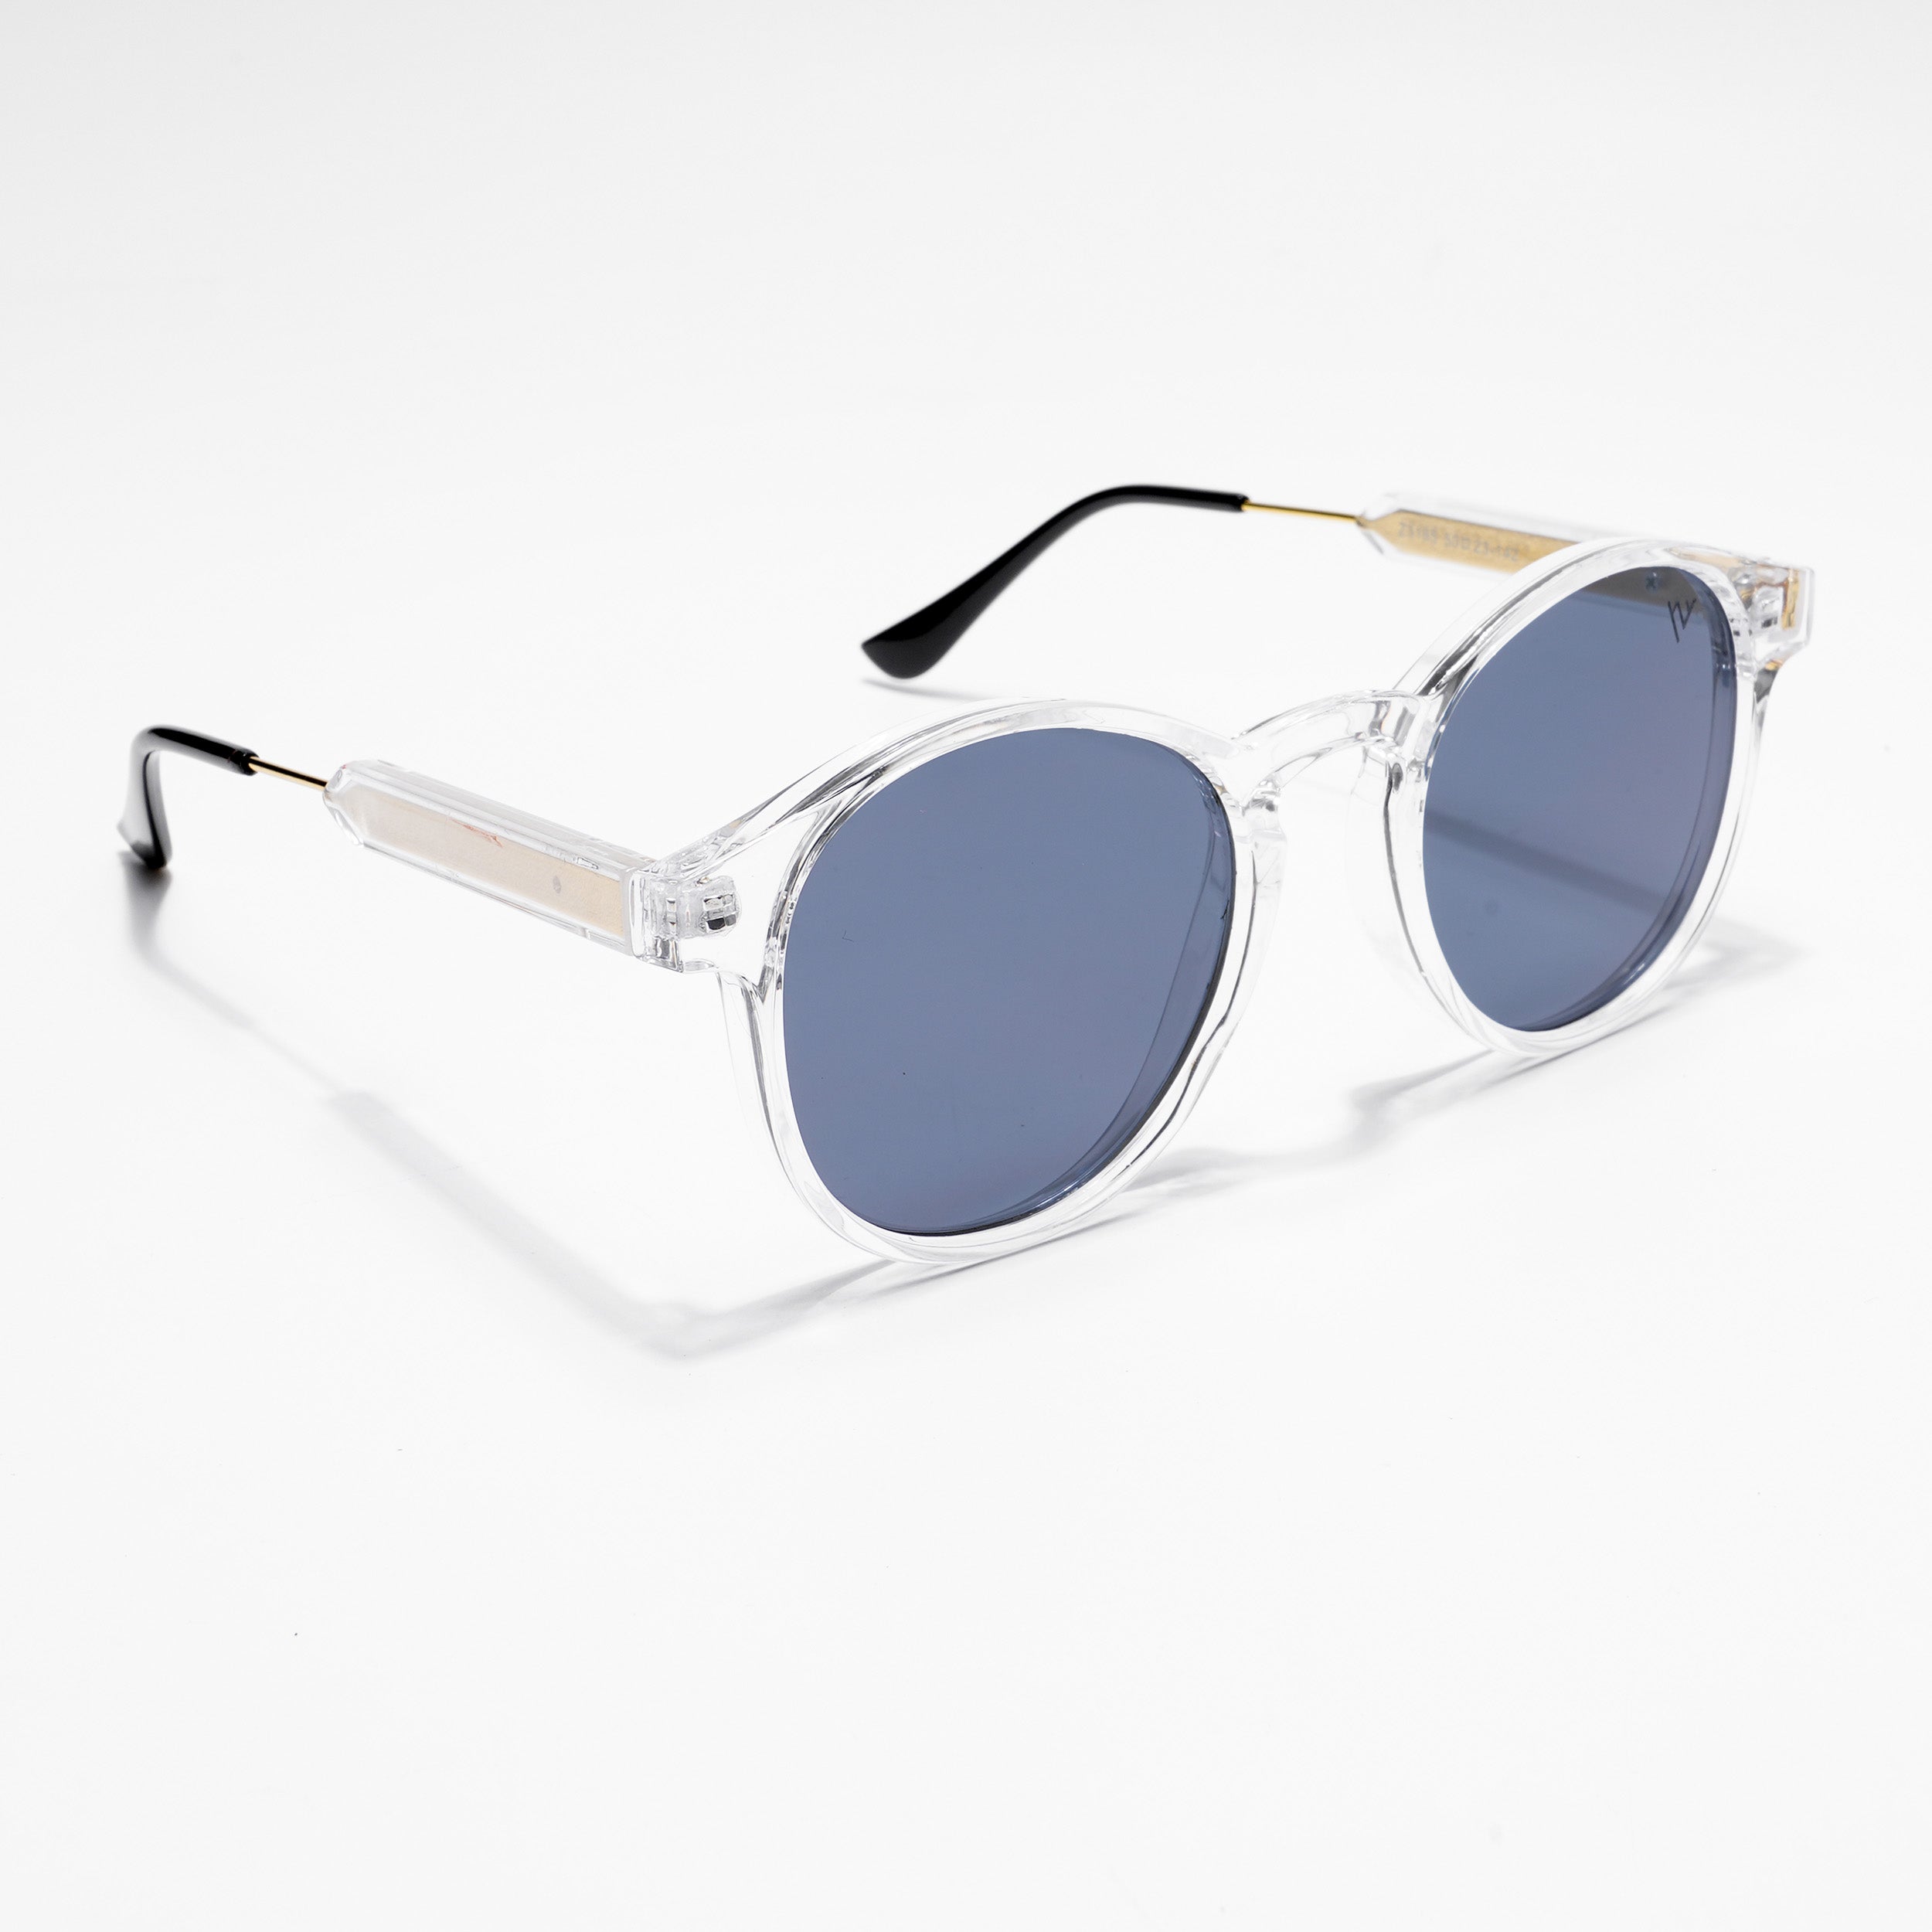 Voyage Grey Round Sunglasses - MG3877